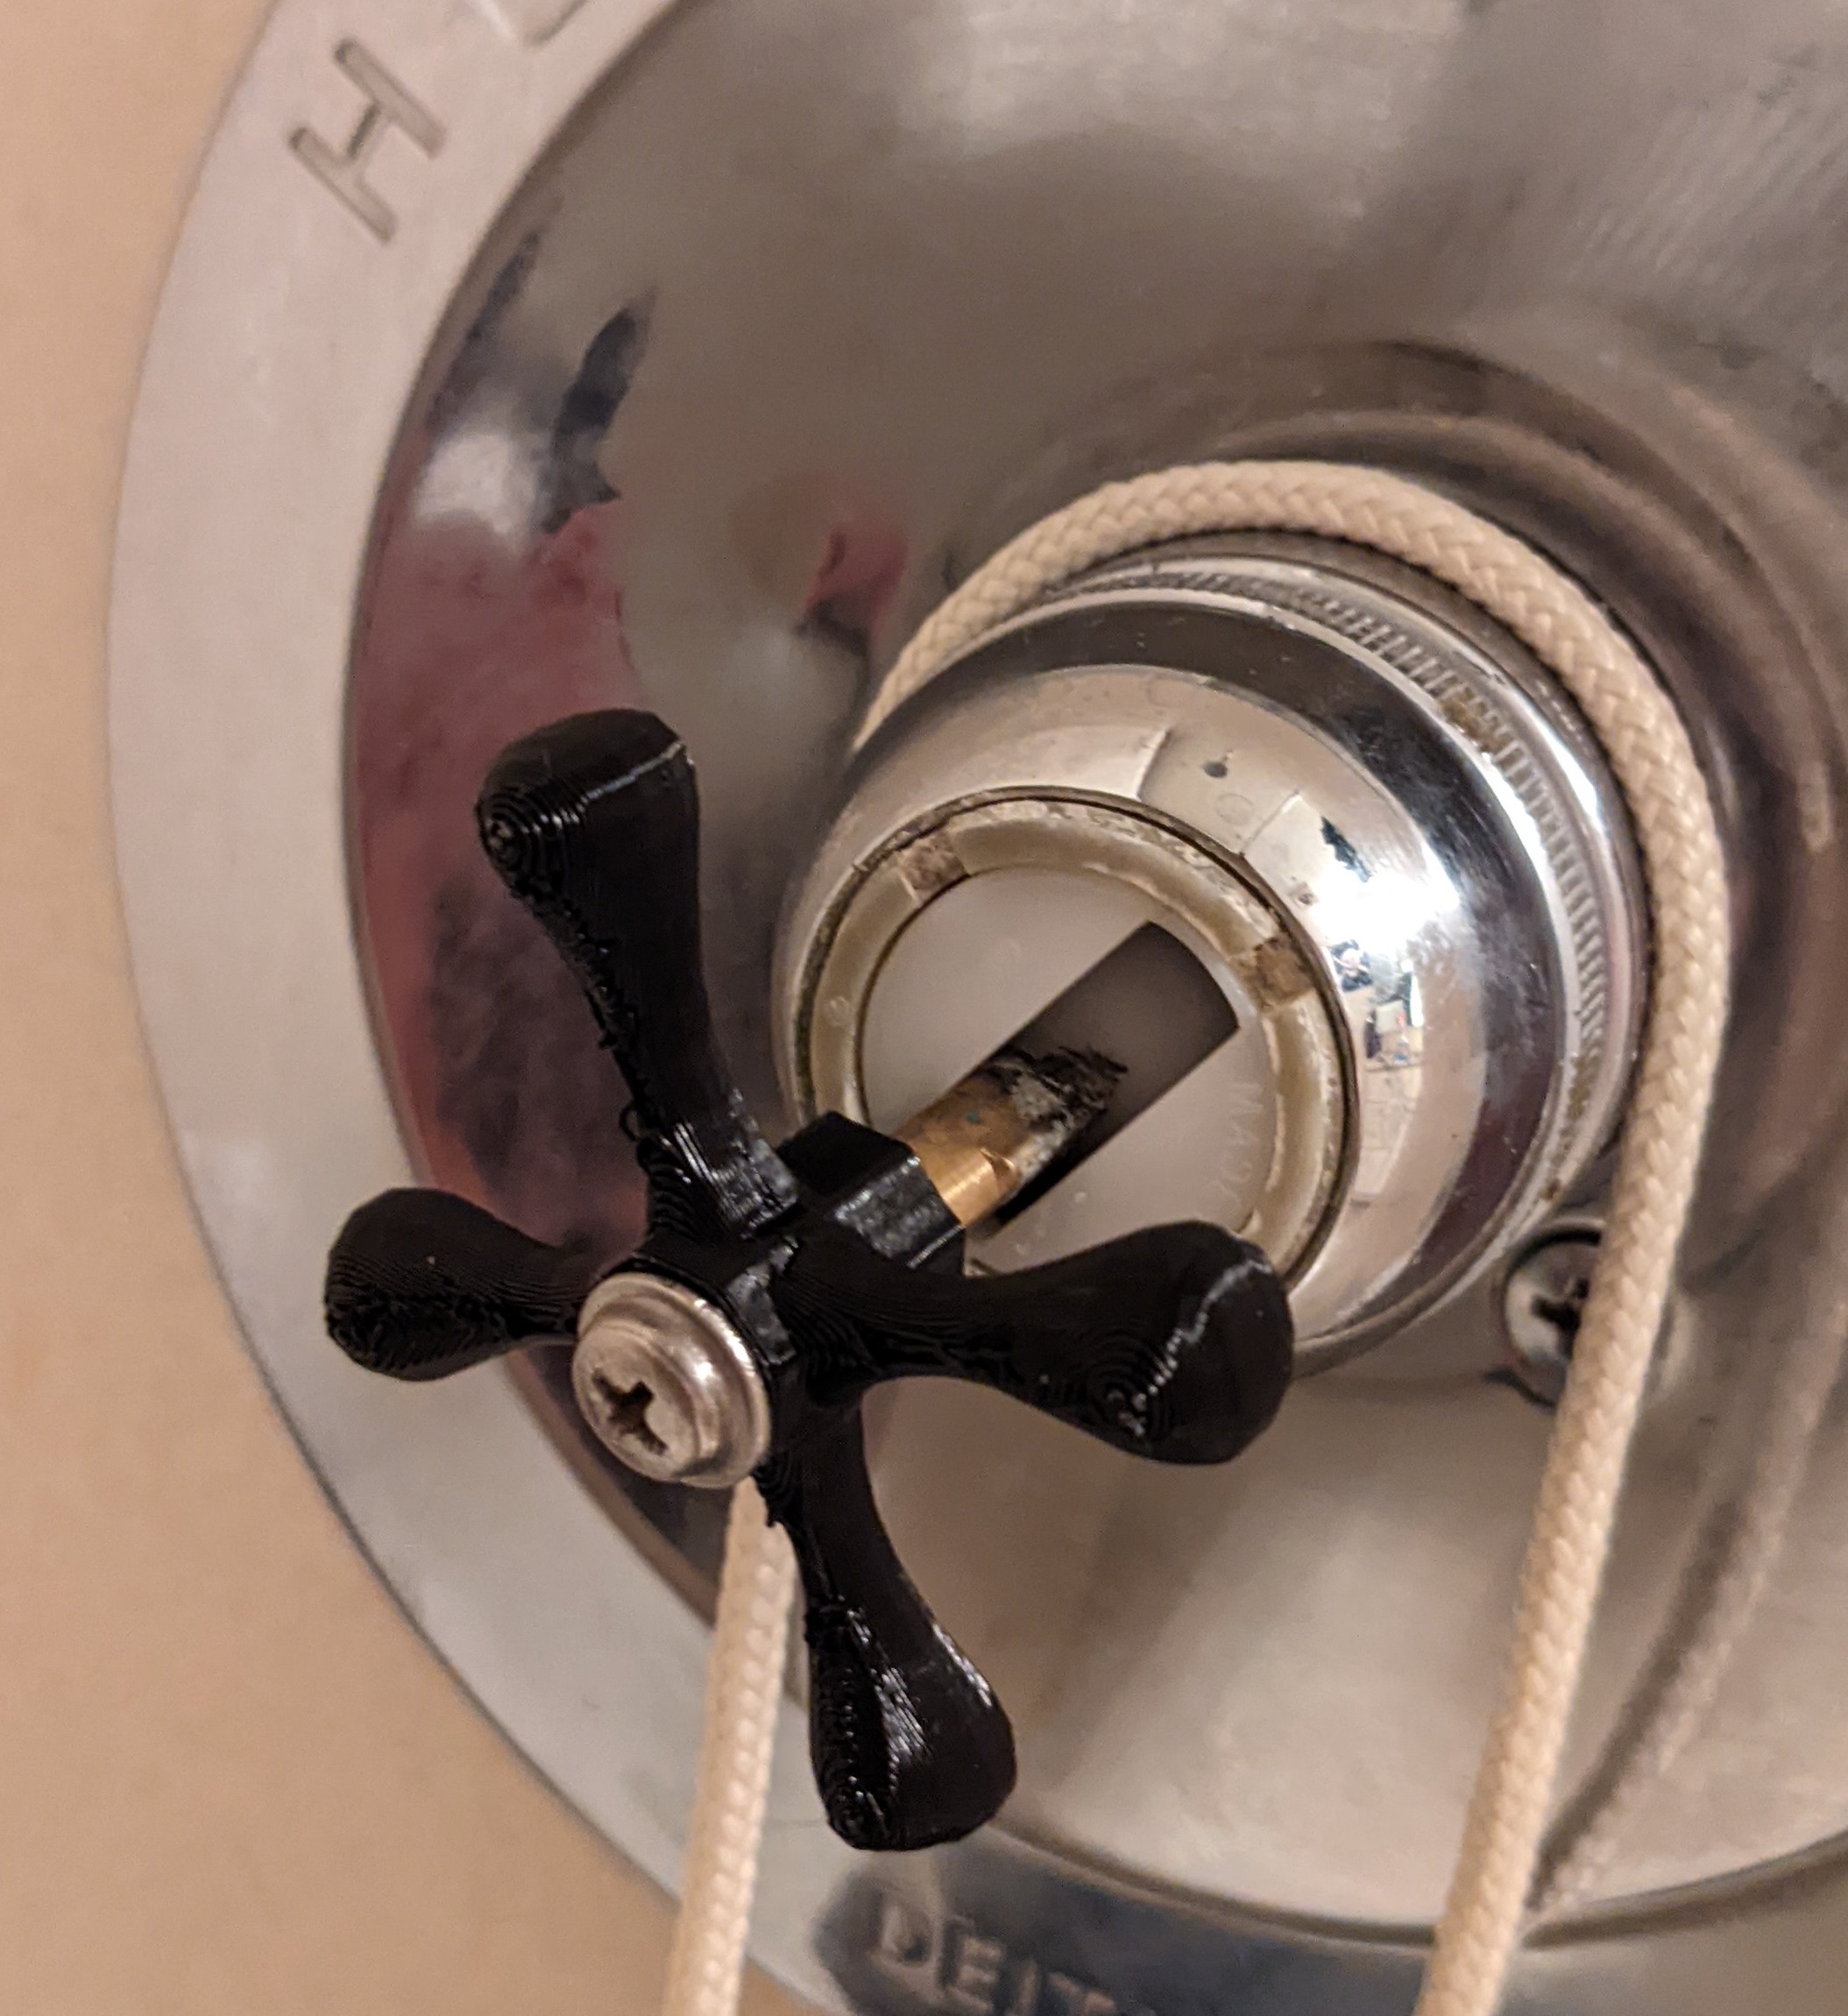 Shower knob final result installed